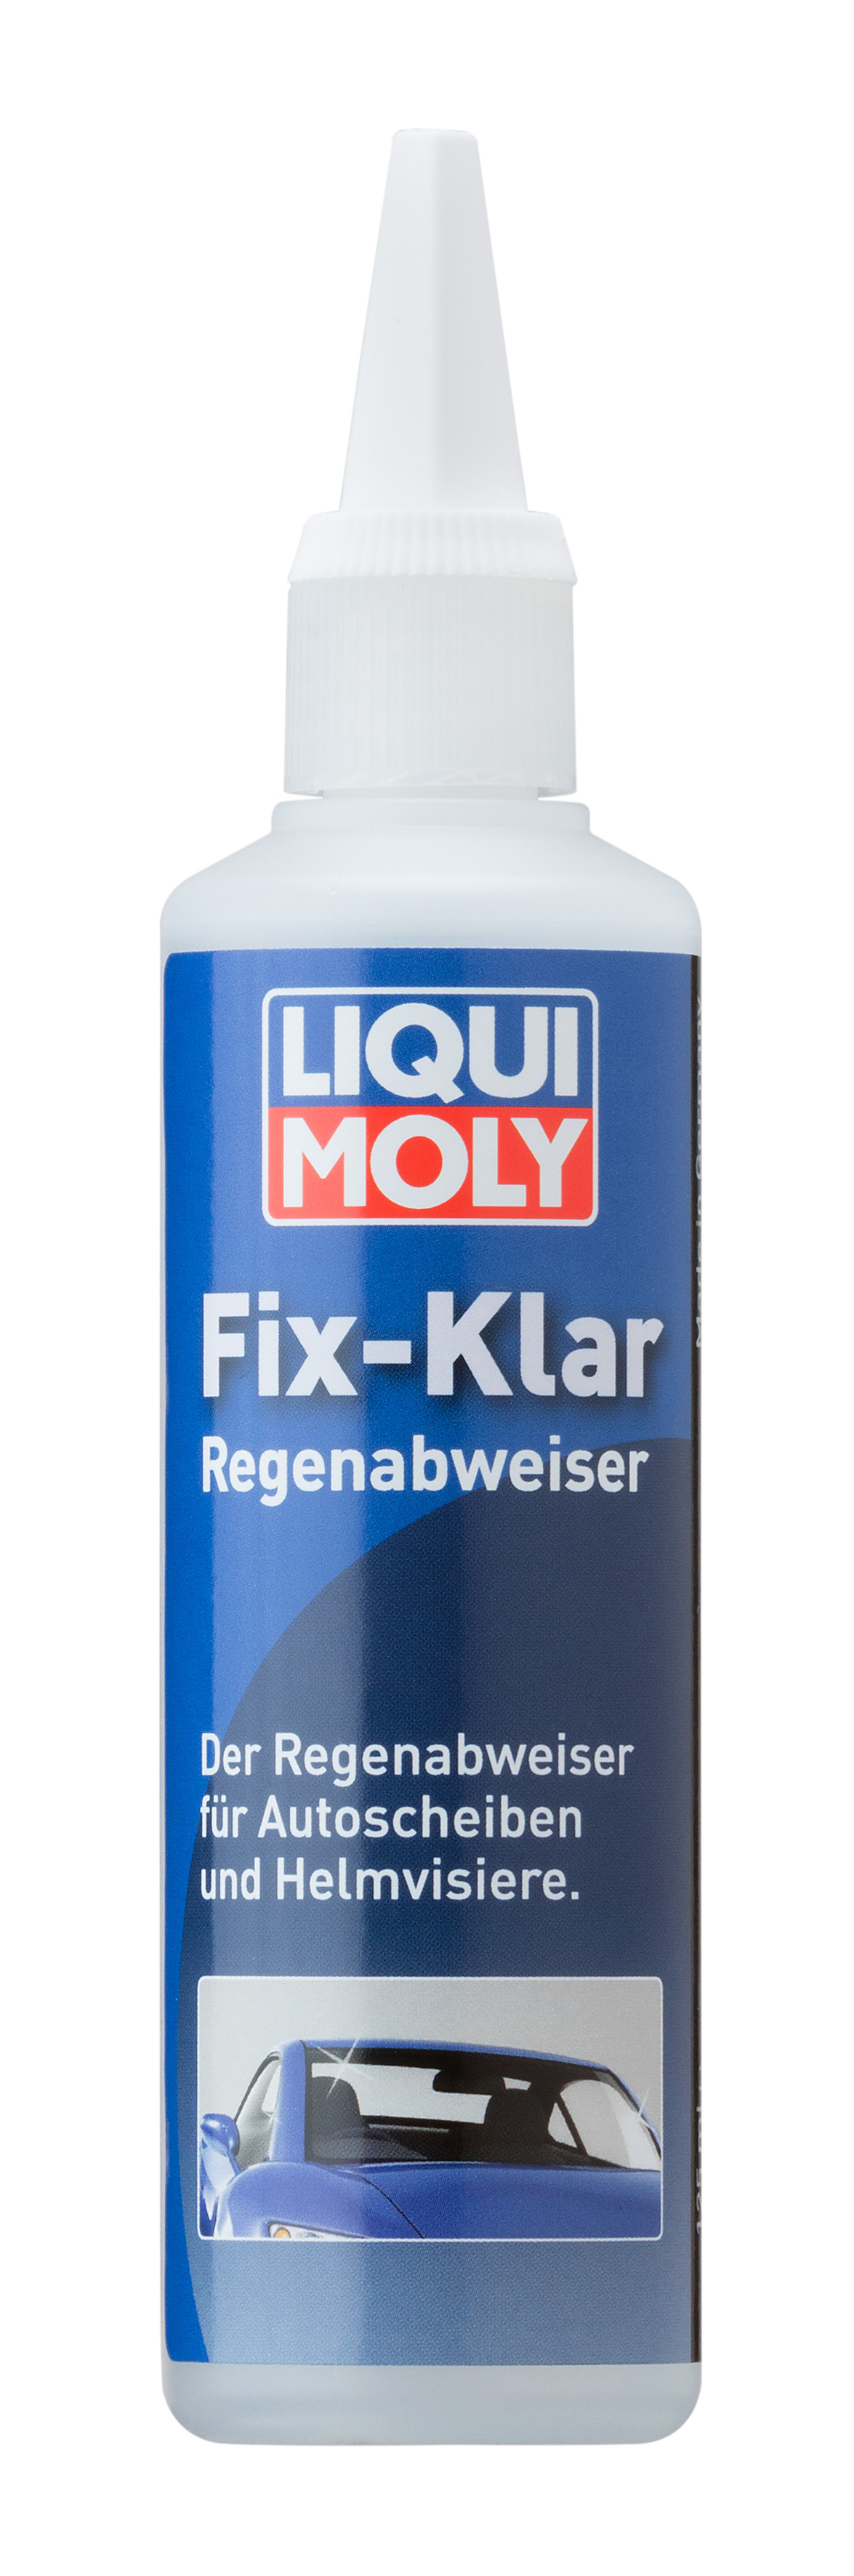 LIQUI MOLY Regenabweiser Fix-Klar, 125ml